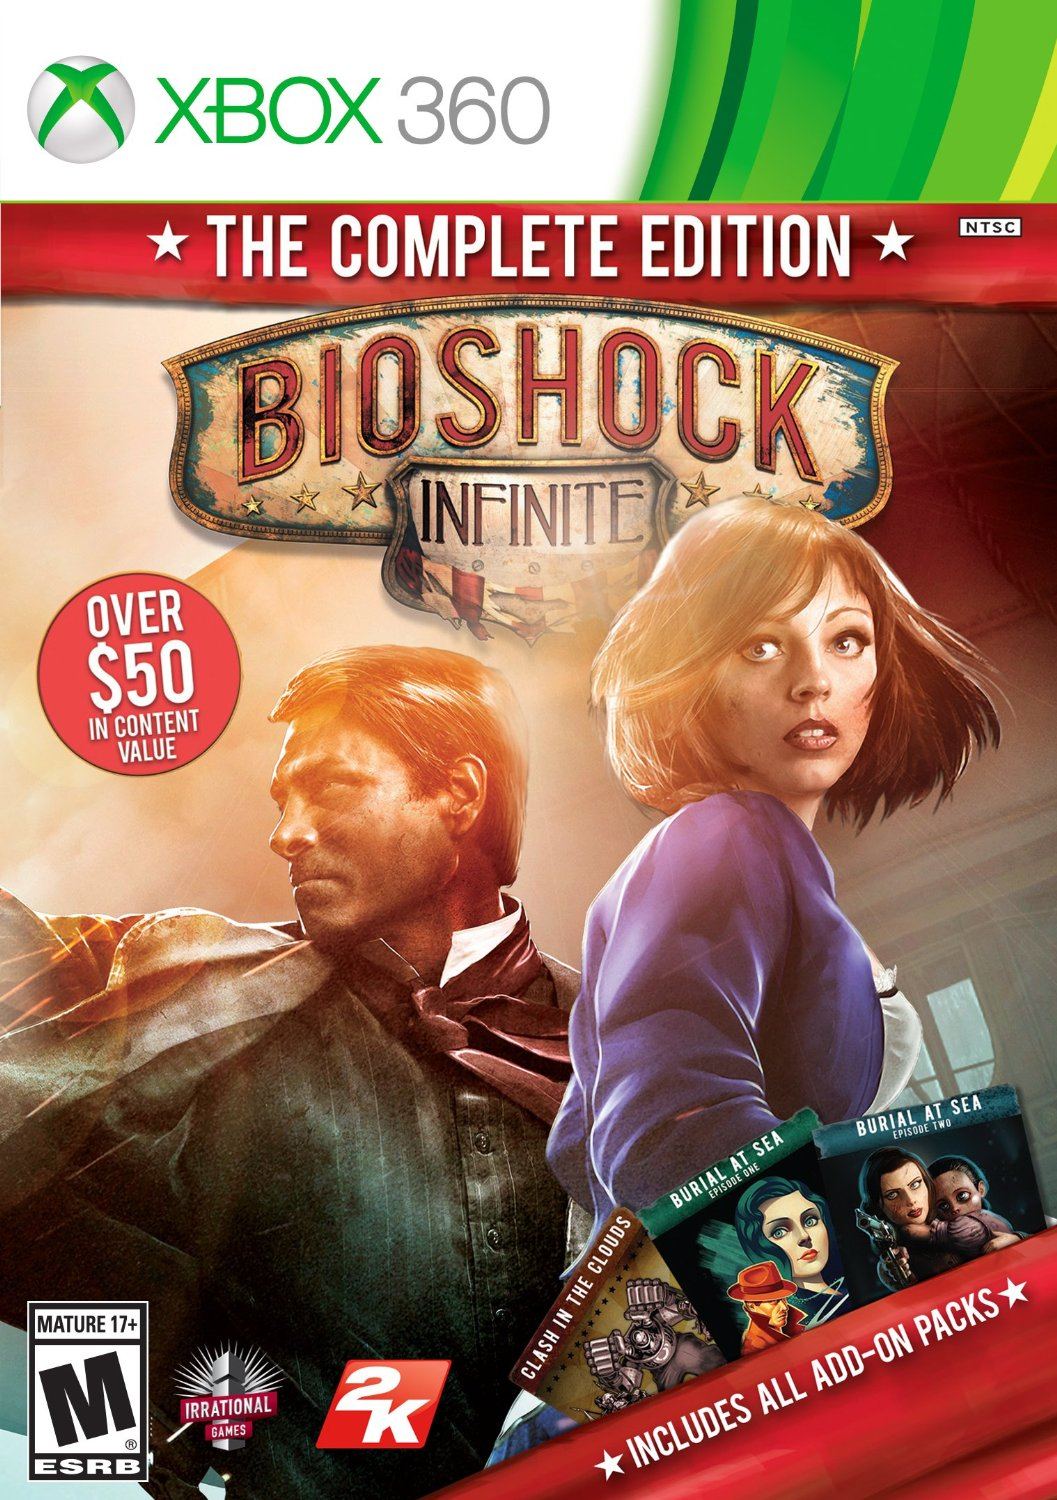 Bioshock Infinite - Save Elizabeth - Trailer 